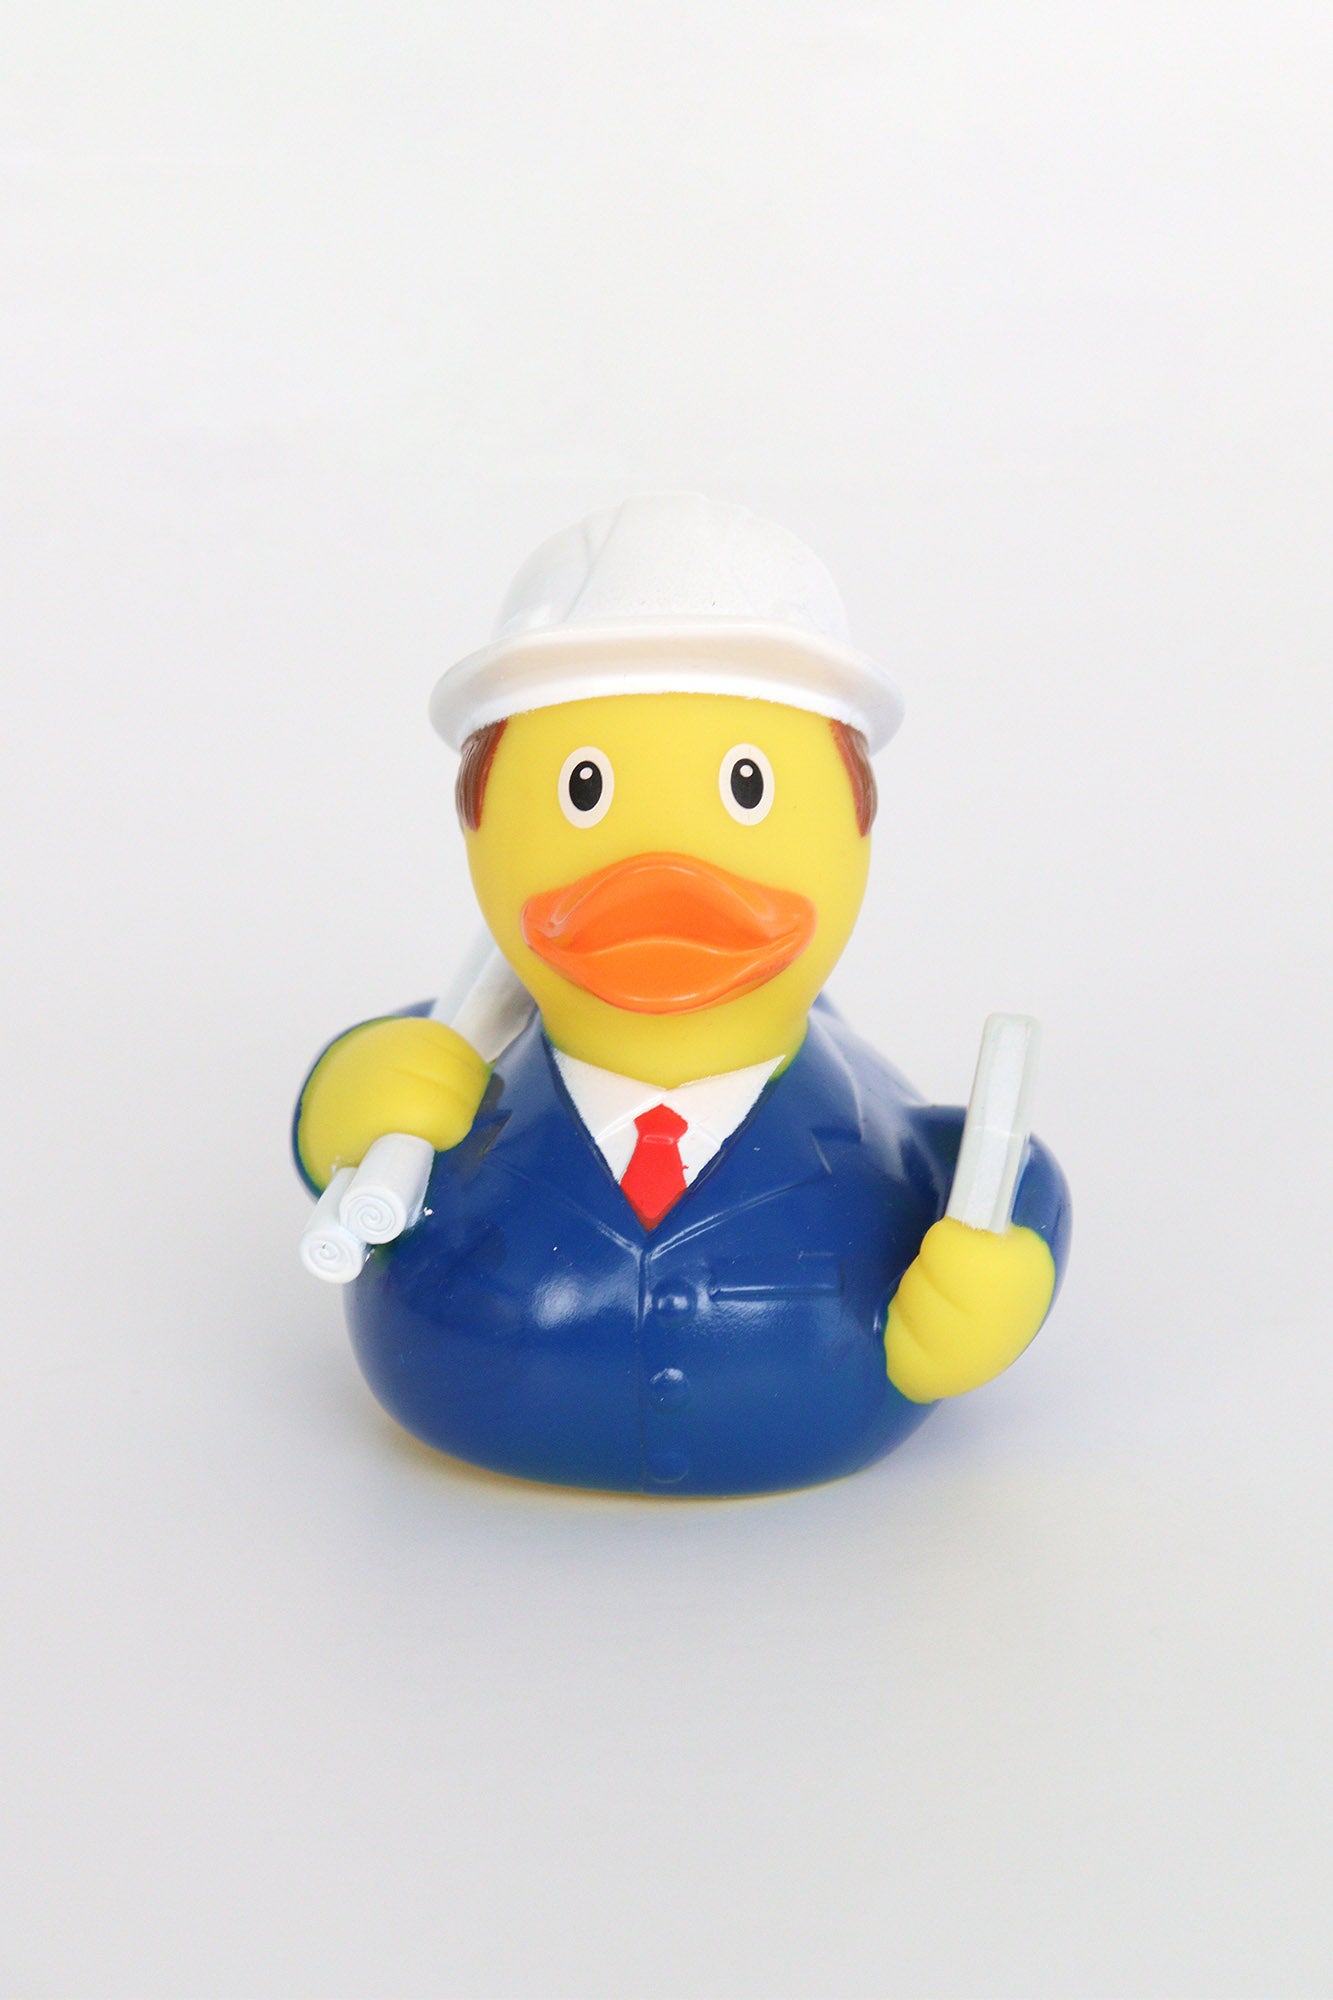 Engineer duck toy plastic